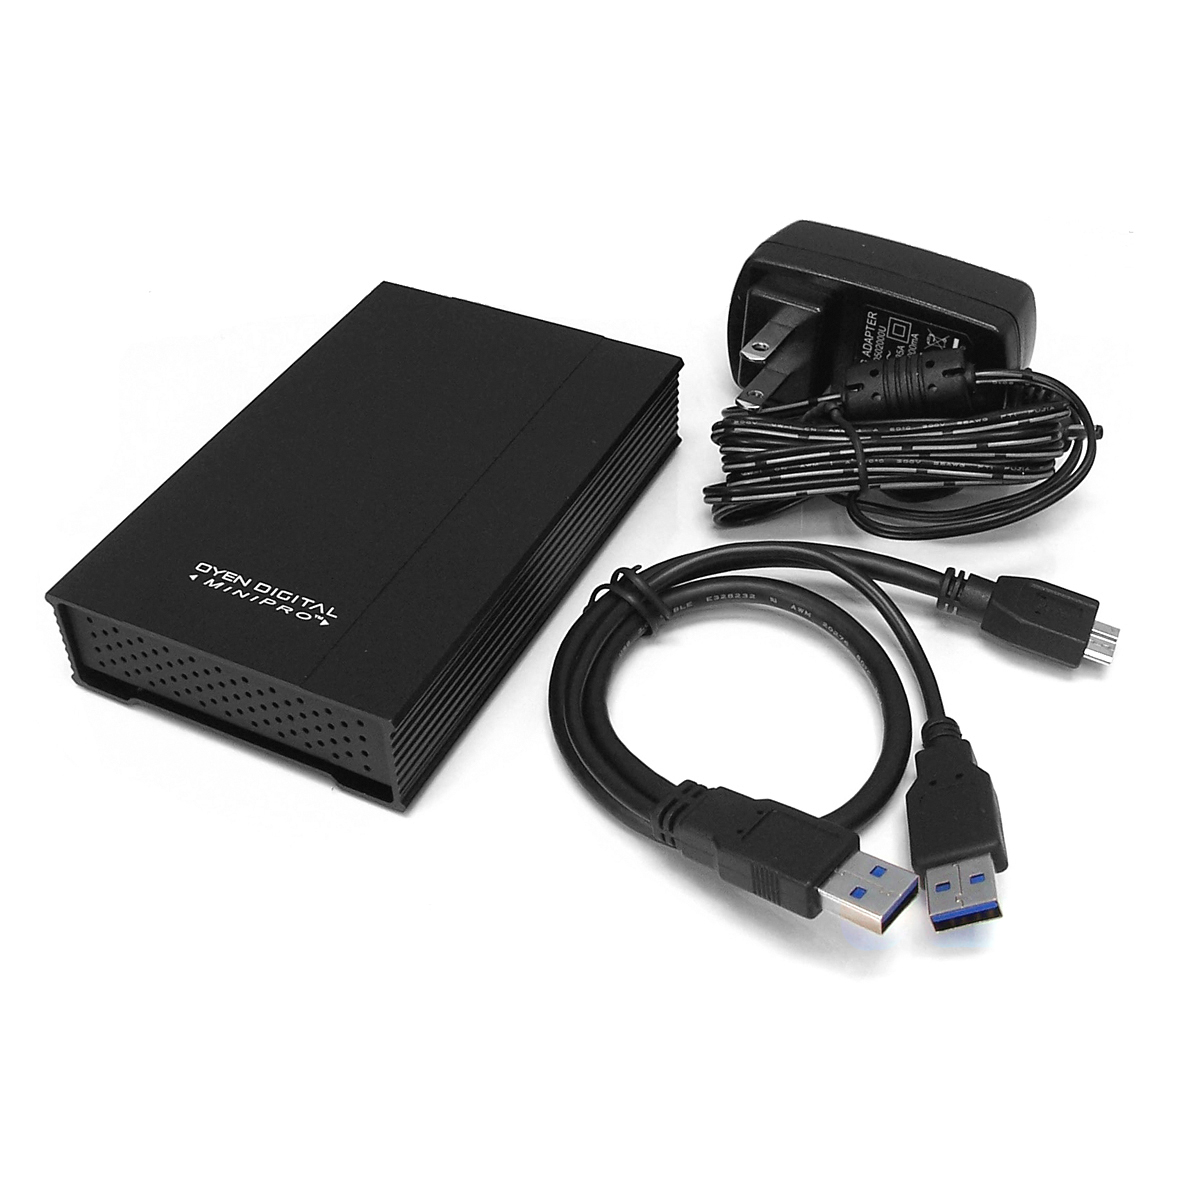 Oyen Digital: MiniPro 1TB External USB 3.0 Portable Hard Drive for 